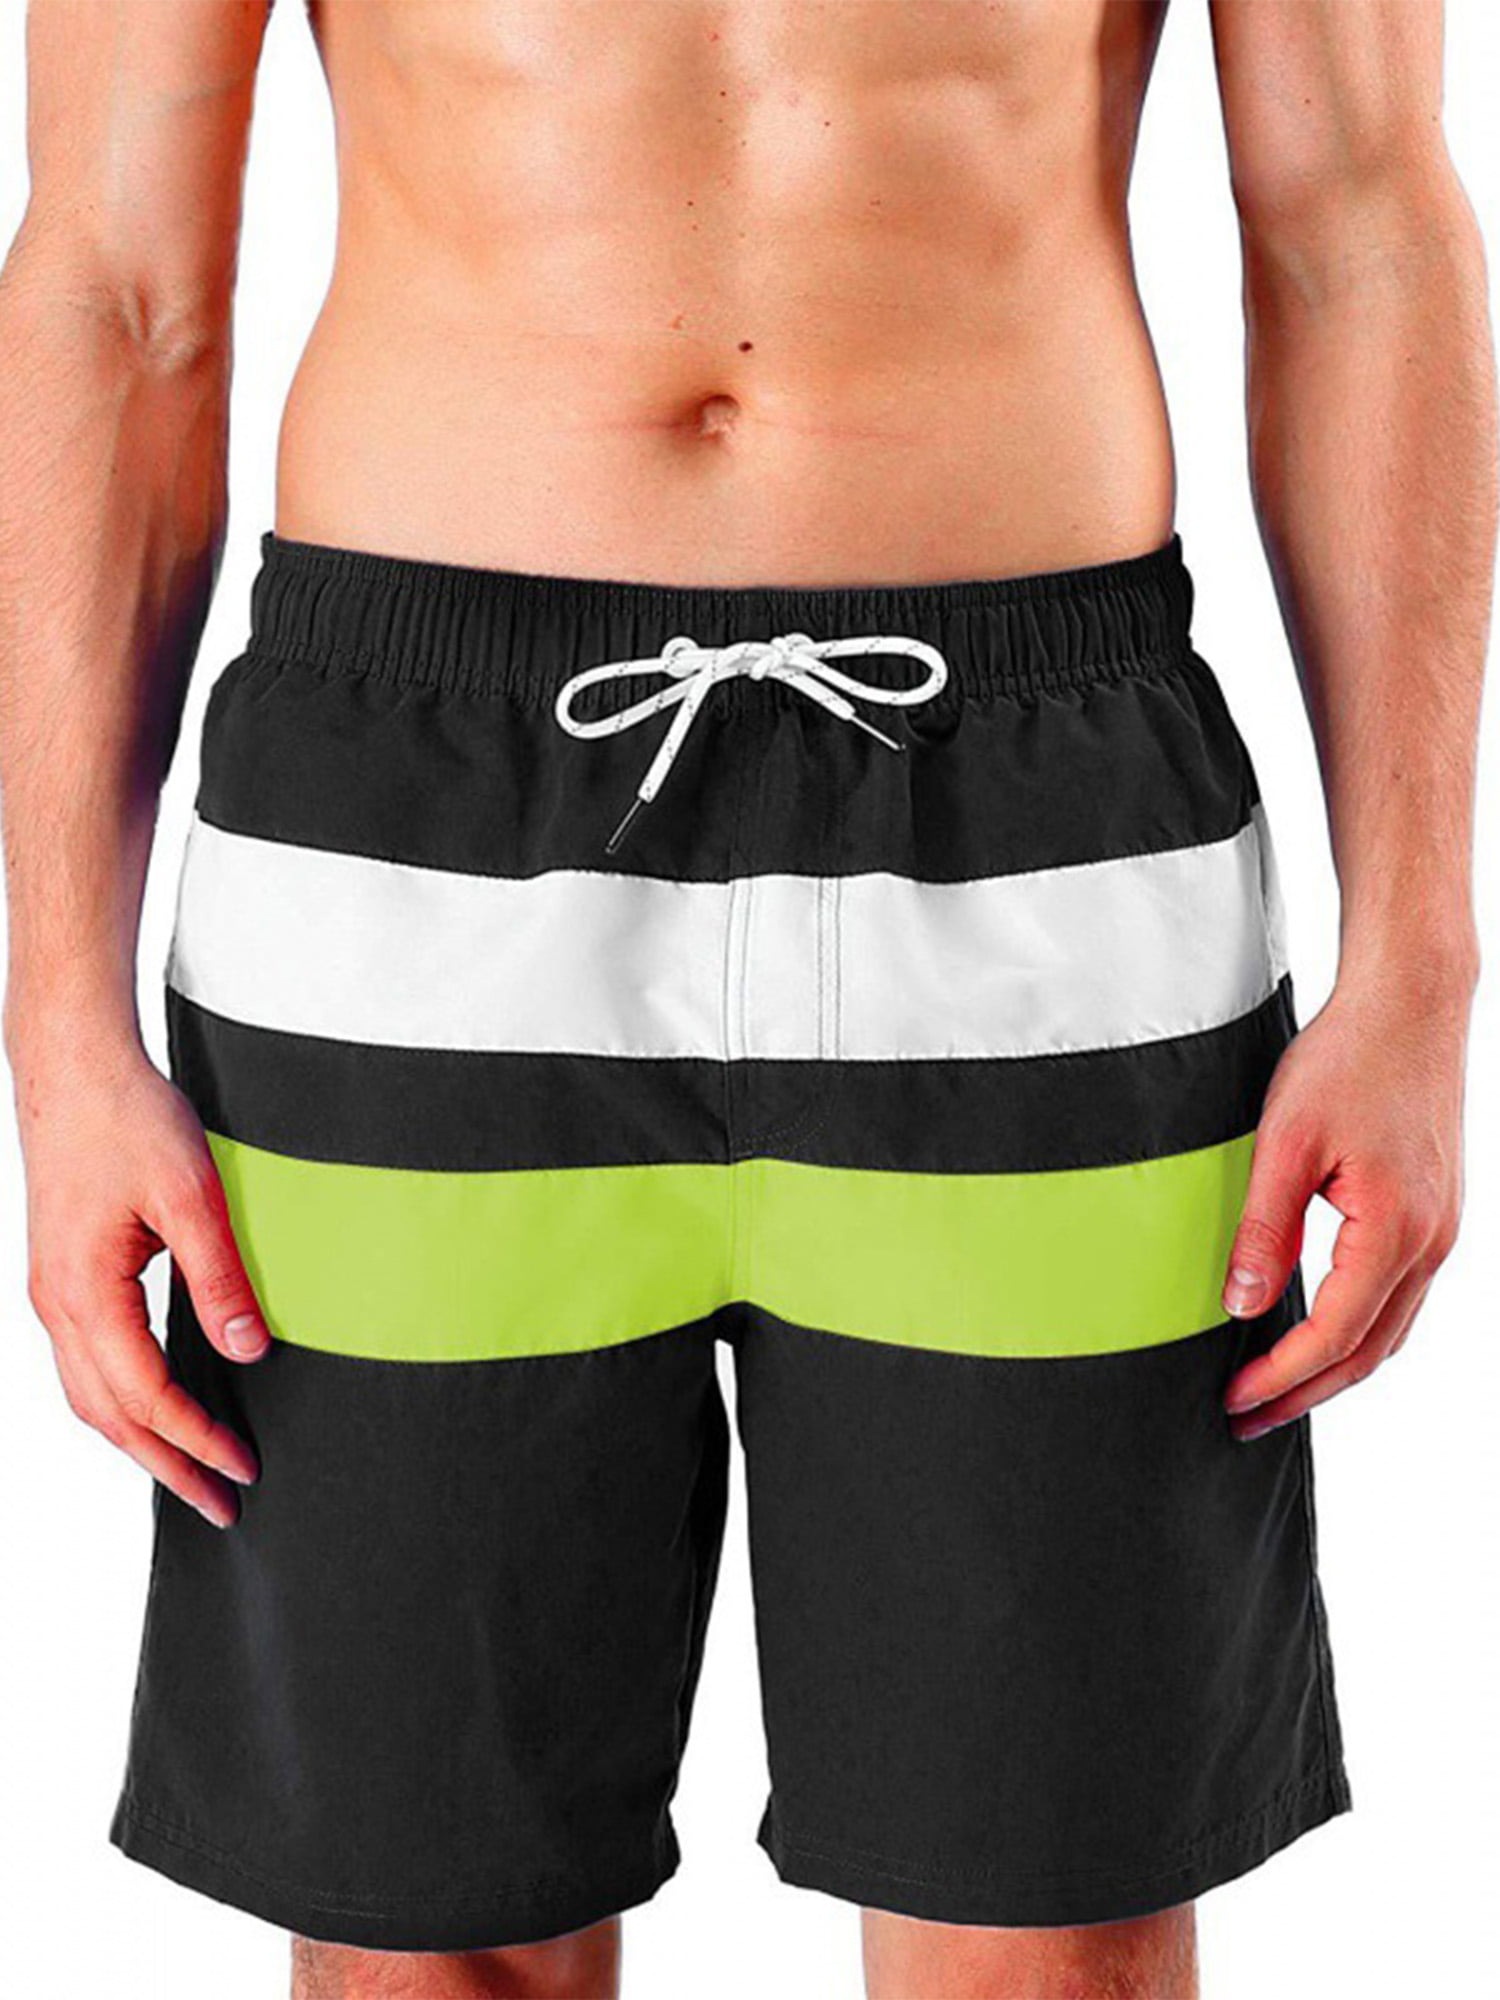 Handelier Pattern Print Swim Trunks Summer Beach Shorts Pockets Boardshorts for Men 